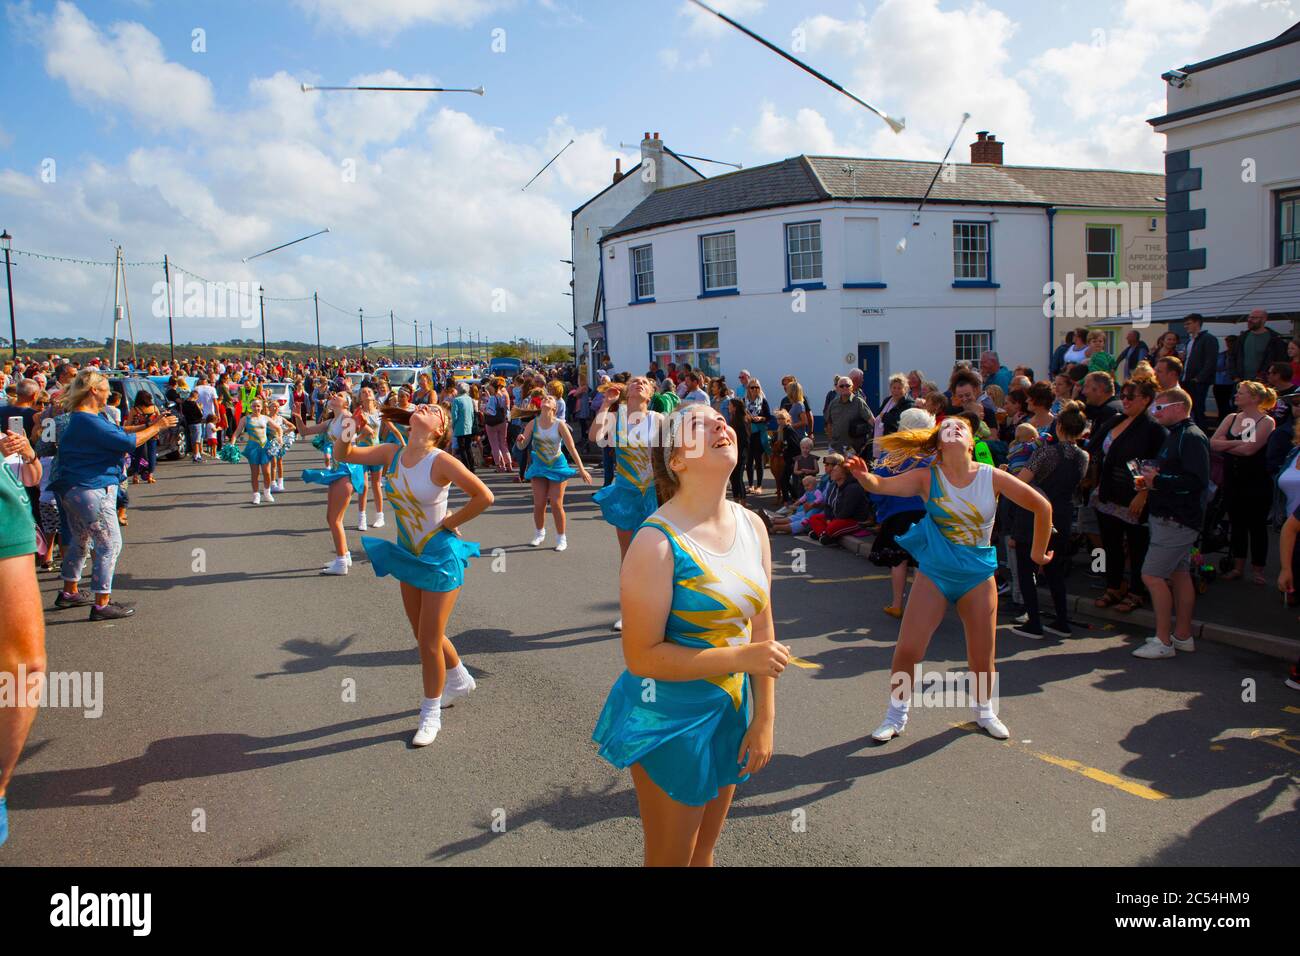 Baton Twirling cheerleaders au Carnaval d'Appledore, août 2019 Banque D'Images